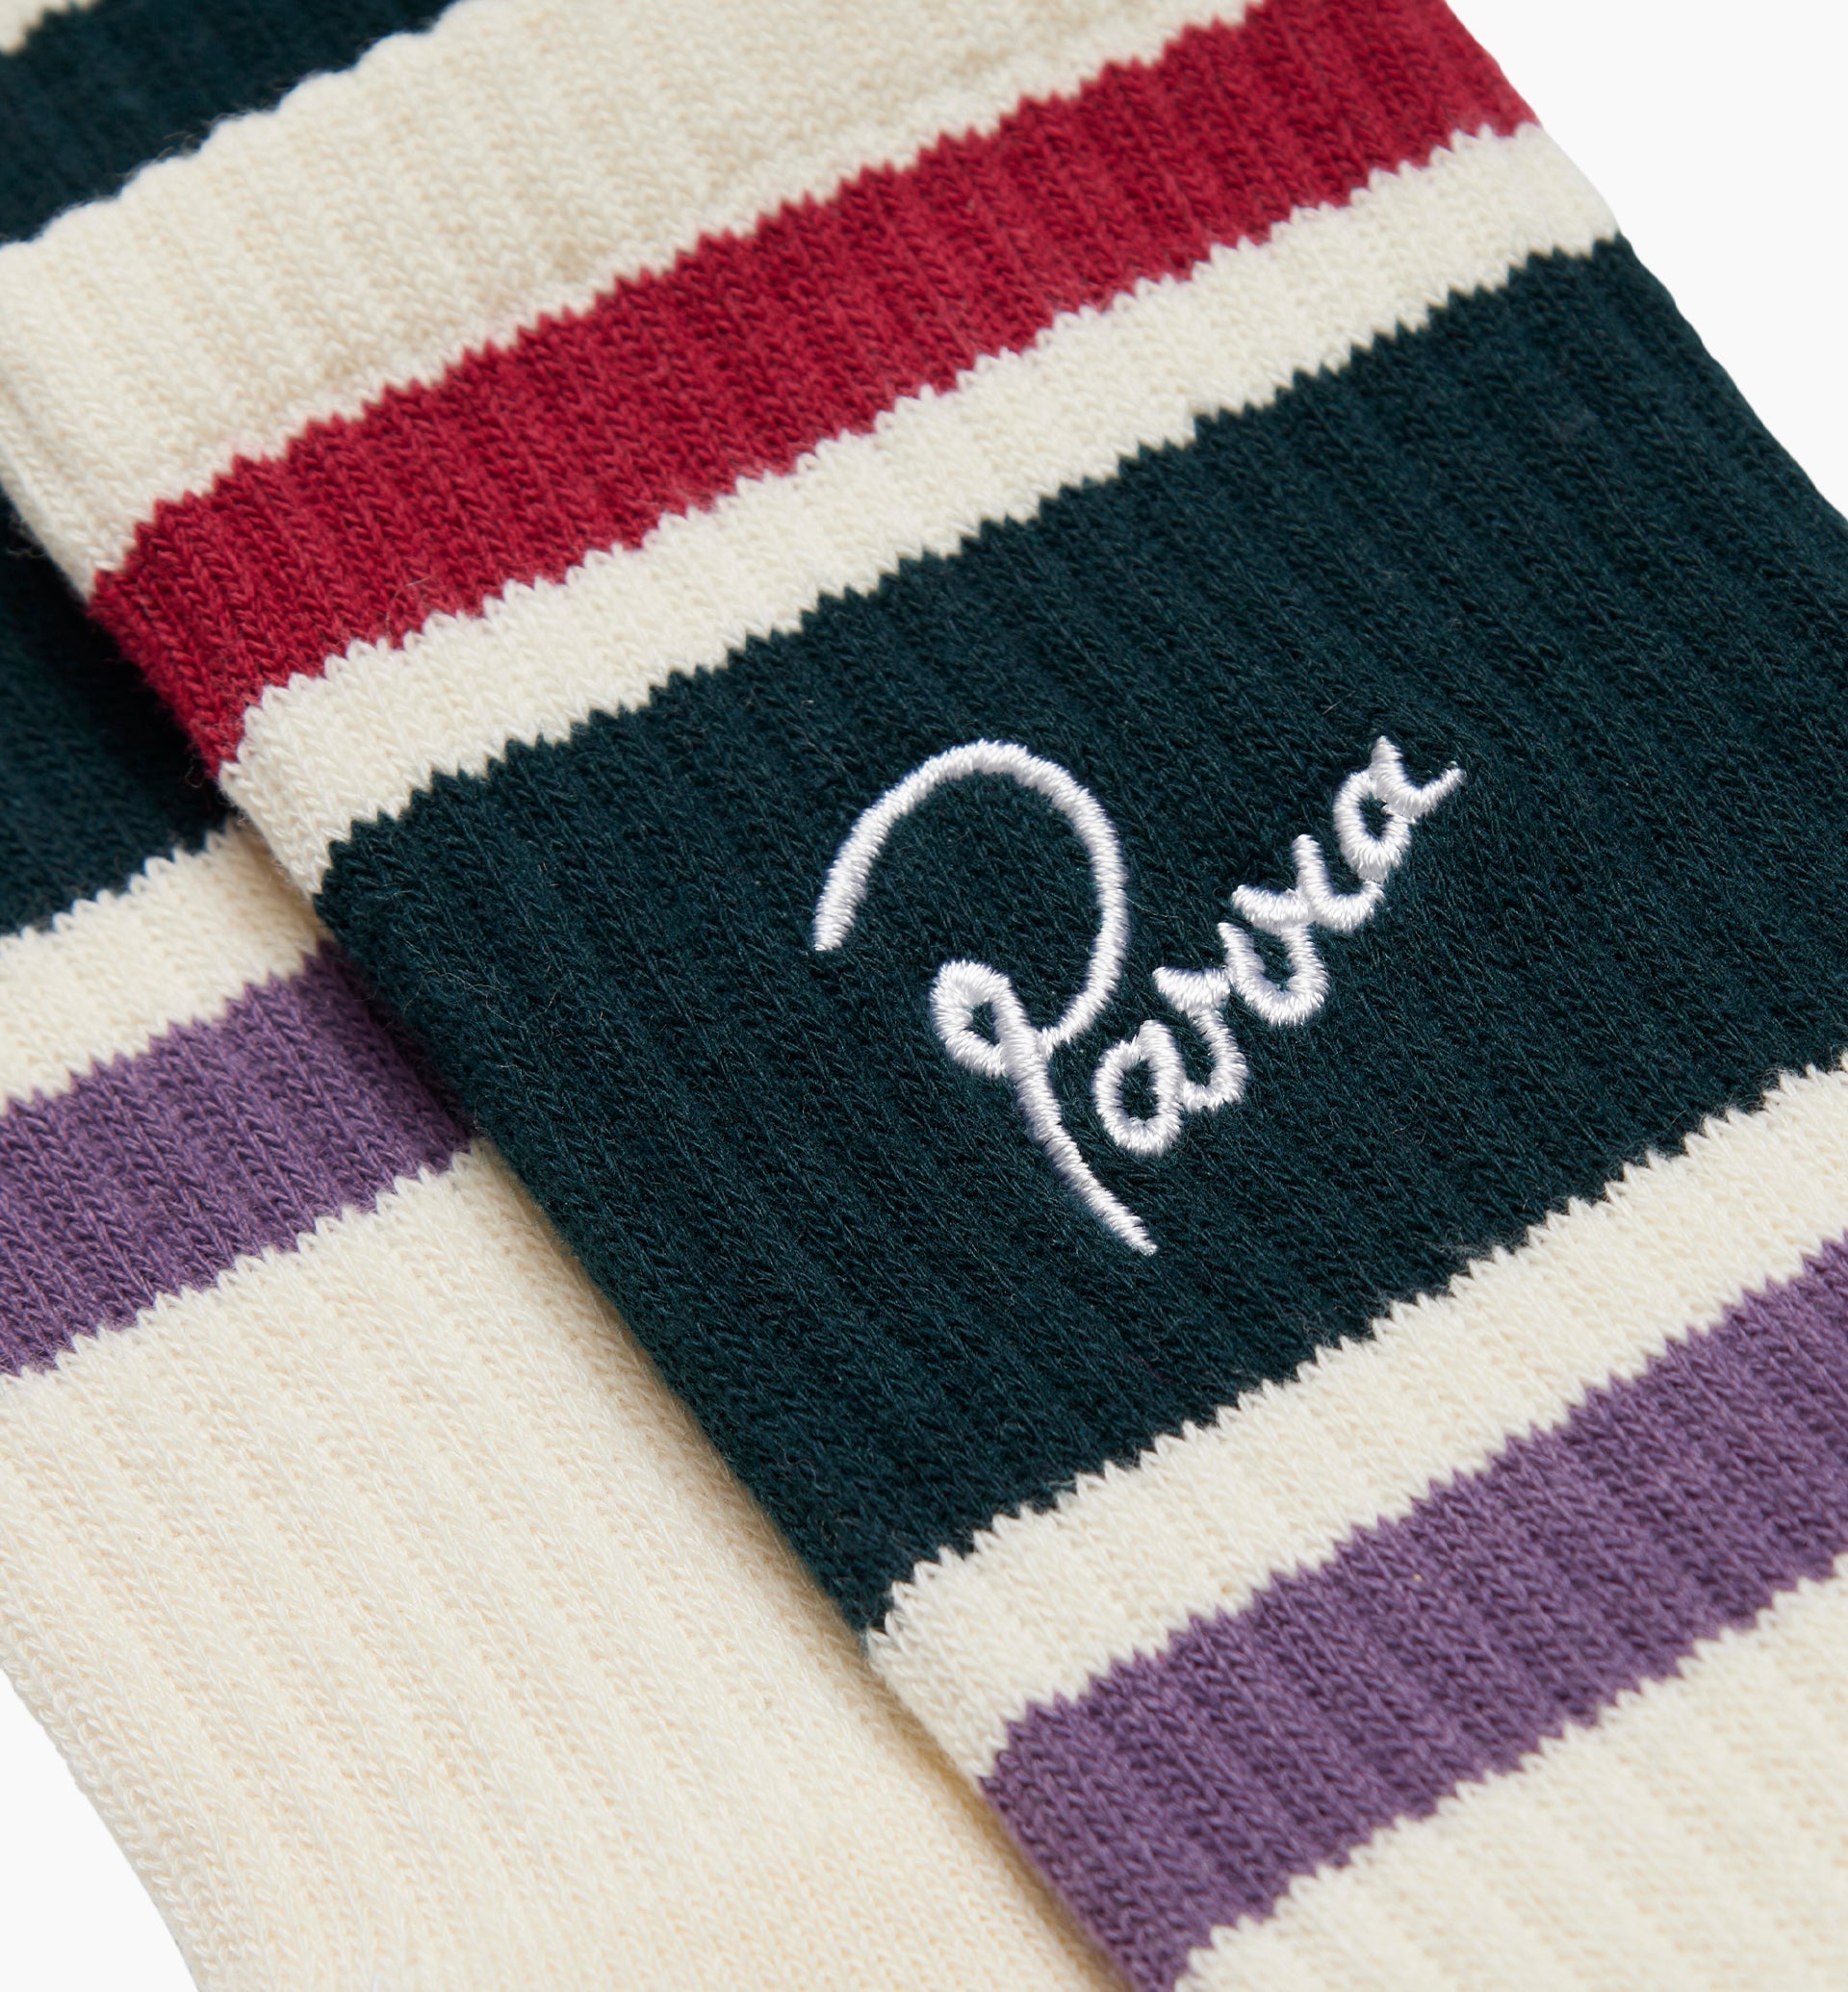 Parra - striper logo crew socks